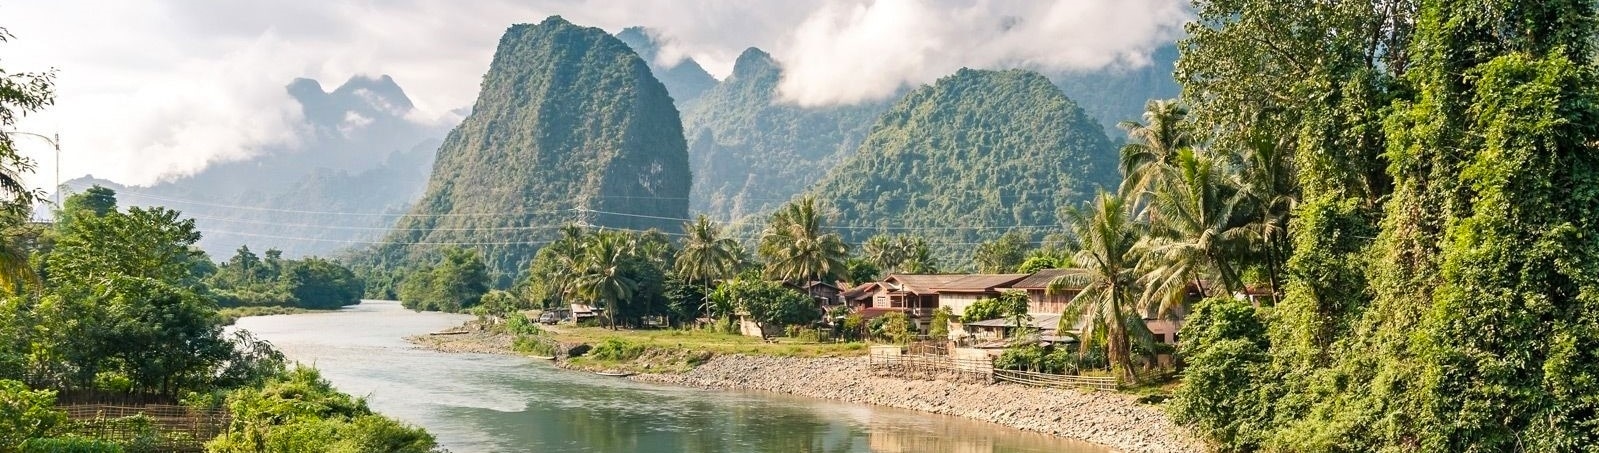 Voyage au Laos découvrir Luang Prabang-Mekong